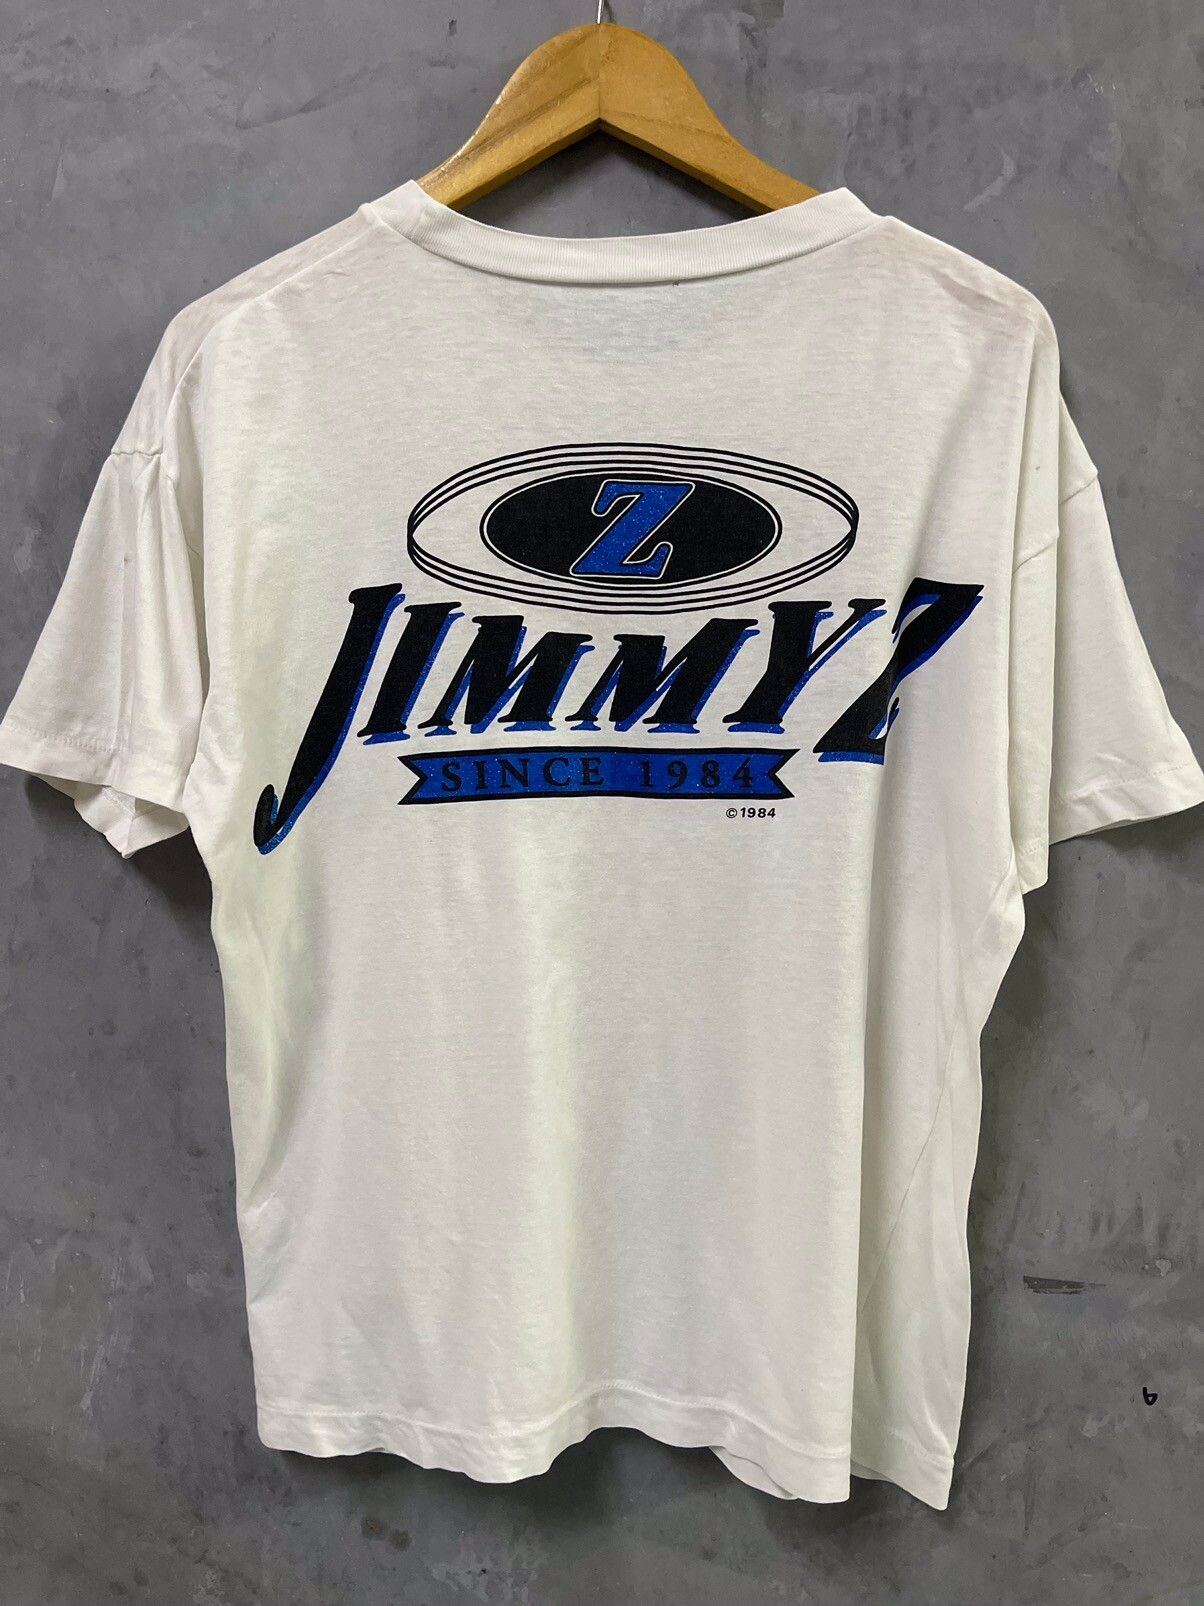 Vintage Vintage JIMMYZ Skateboard Streetwear T-shirt Size US M / EU 48-50 / 2 - 4 Thumbnail